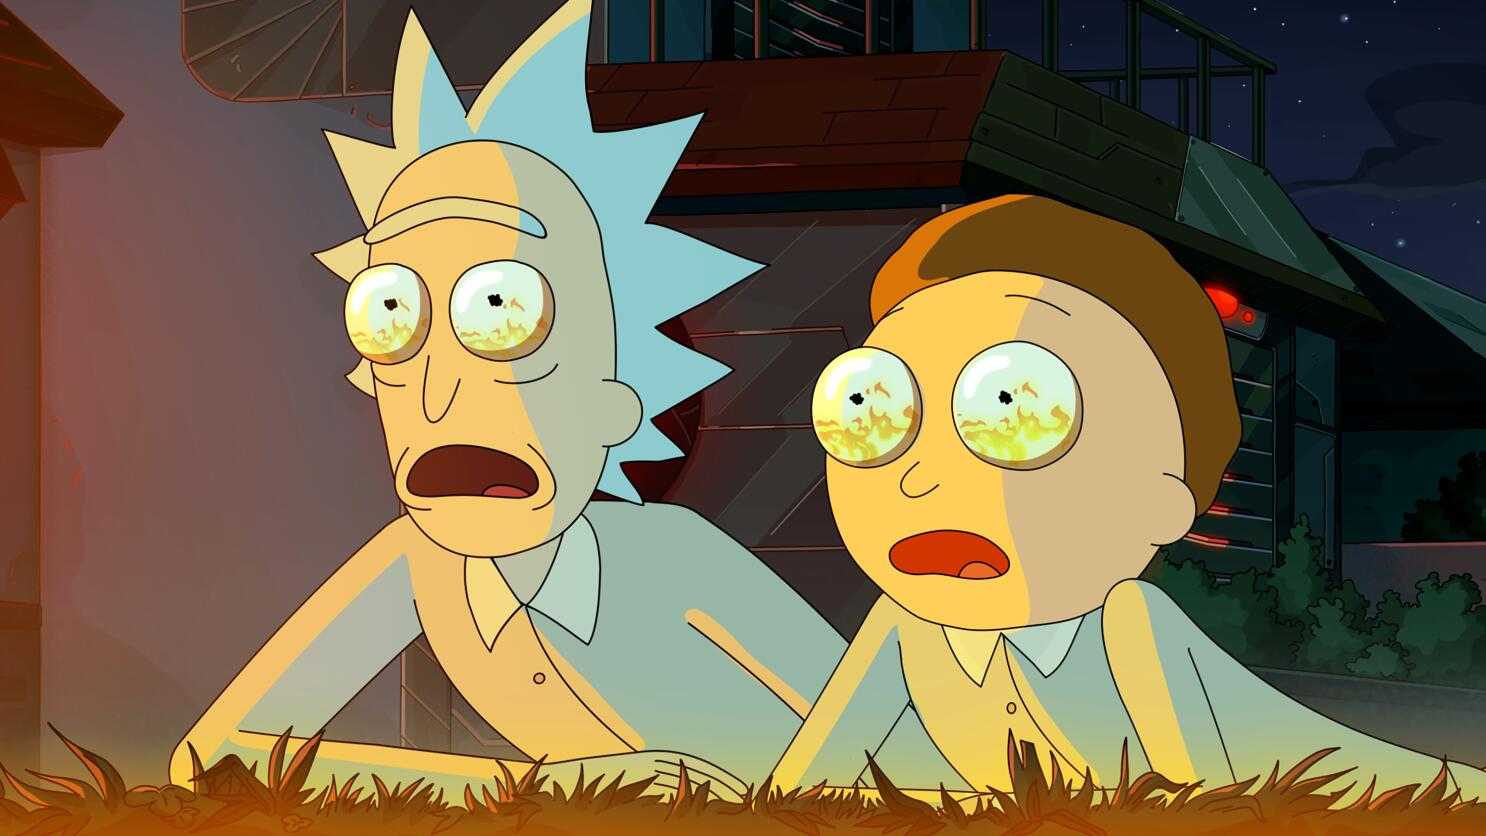 Rick and Morty (Source: Hyperbeast)